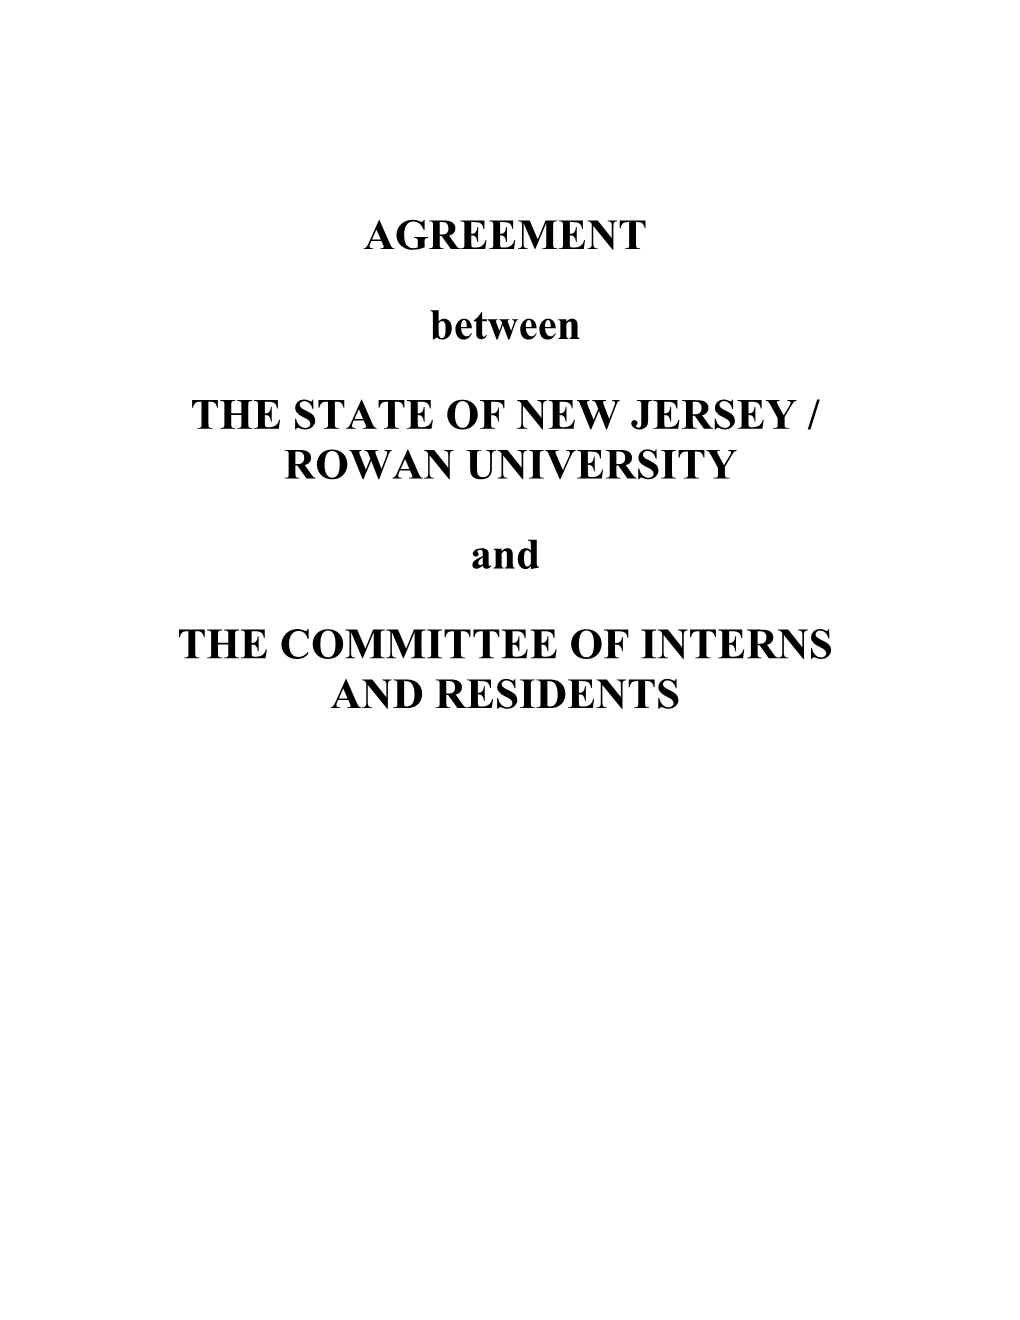 The State of New Jersey / Rowan University